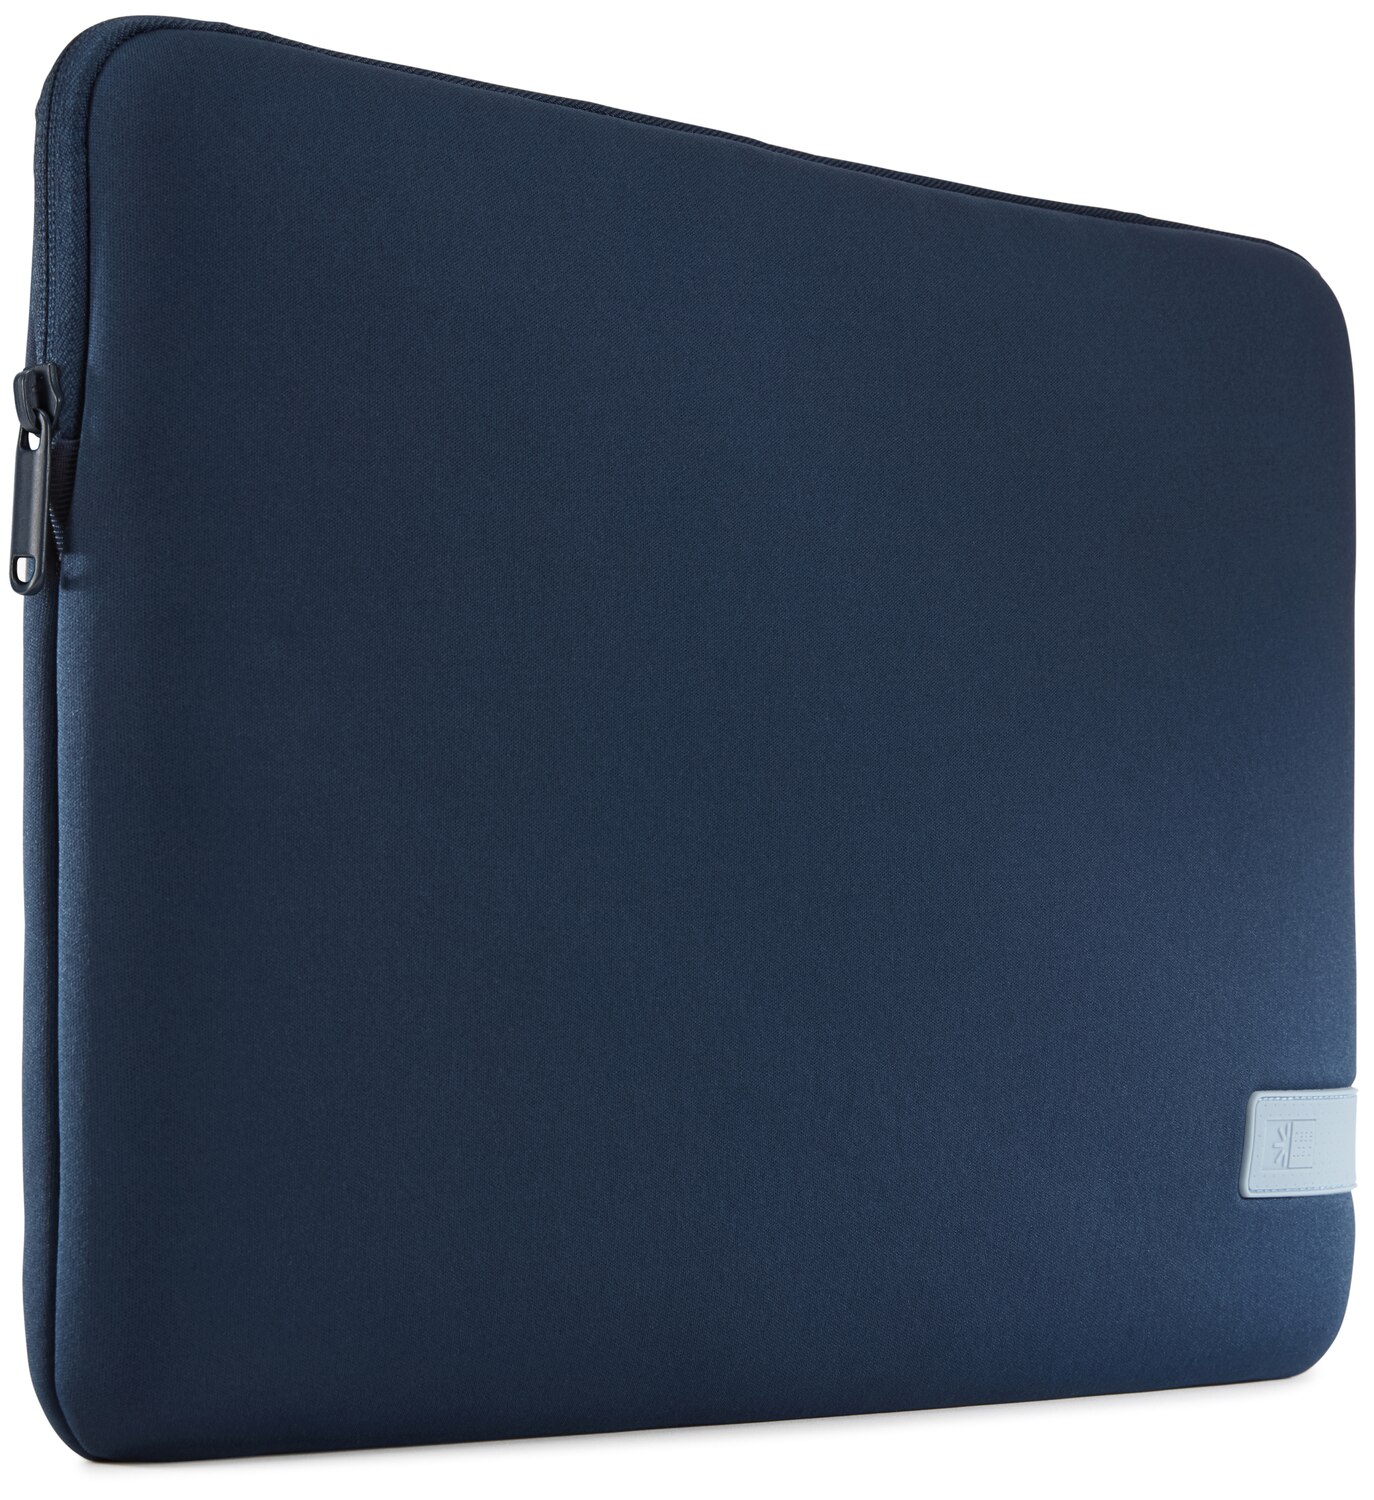 Case Logic Reflect 15.6" Laptop Sleeve- Dark Blue